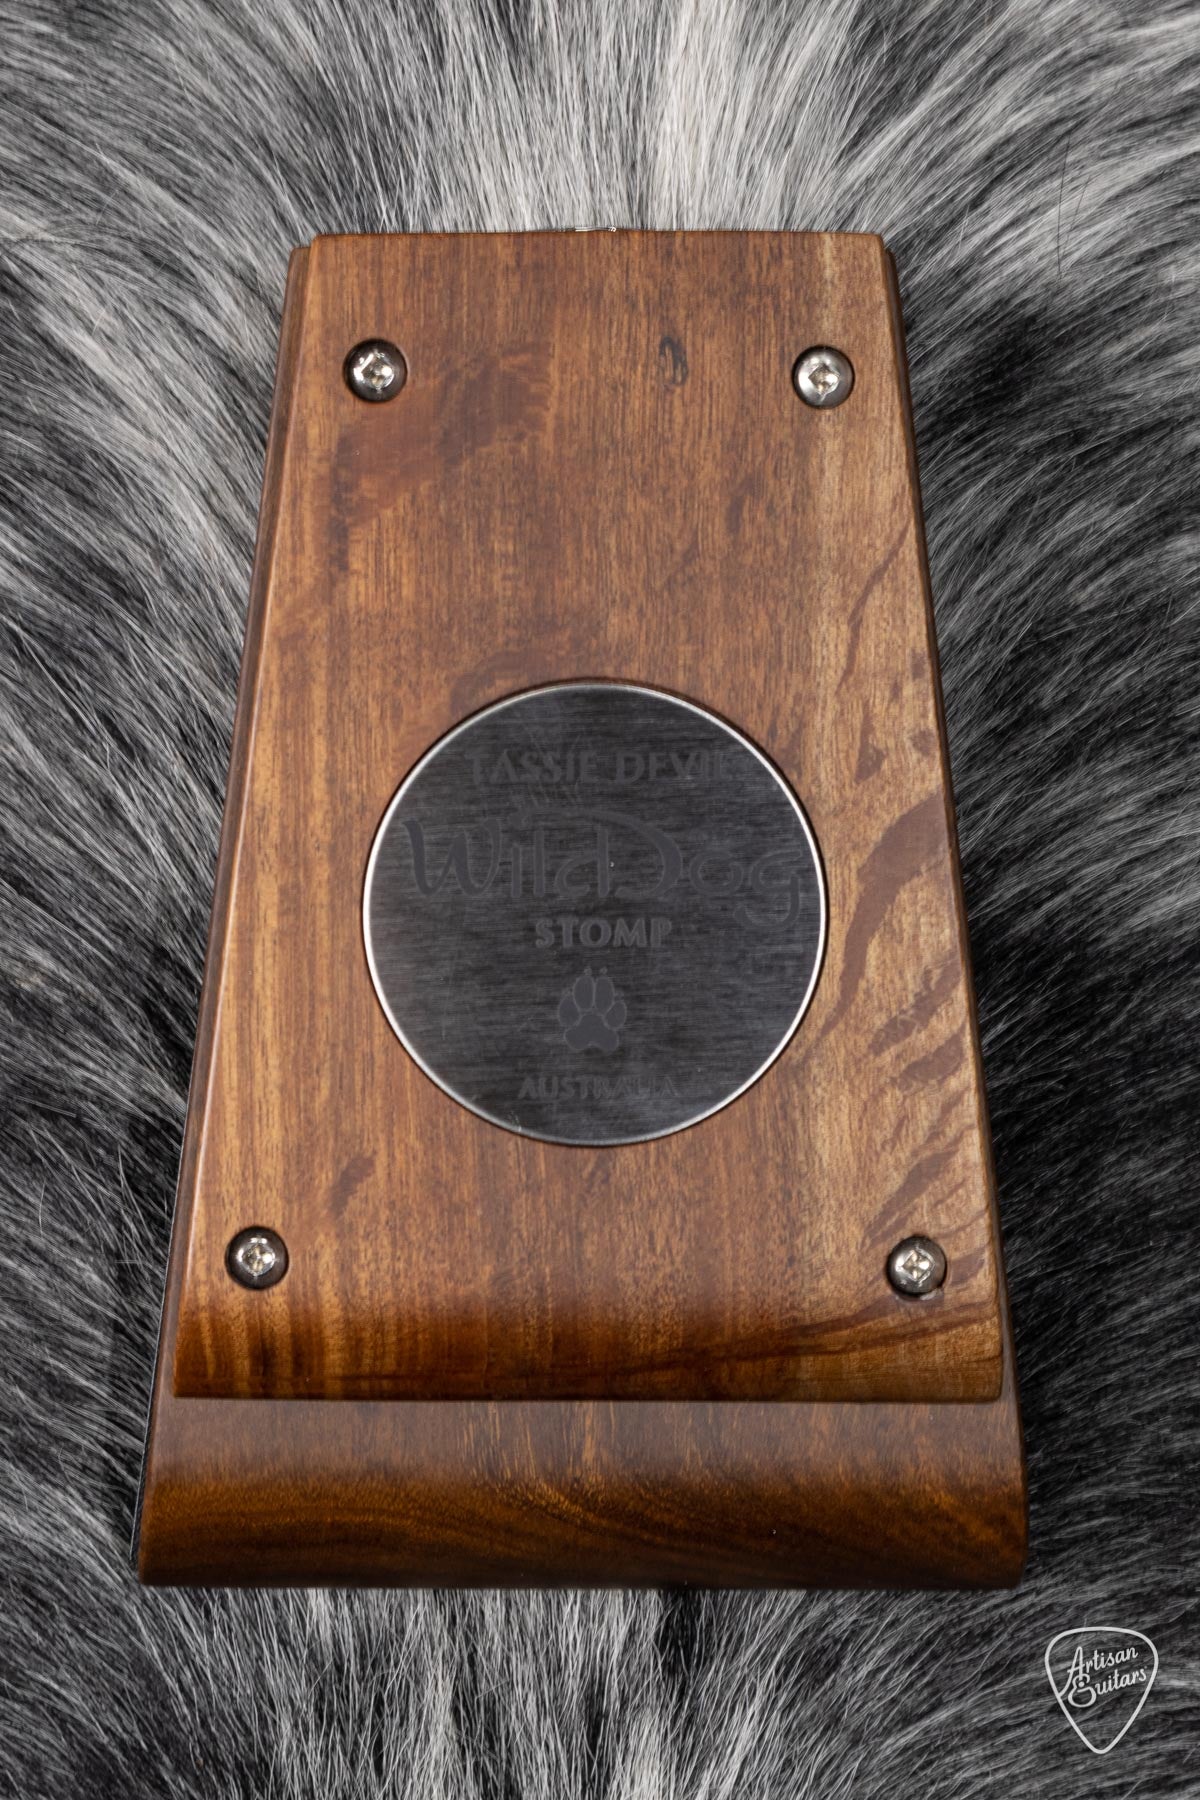 Wild Dog Tassie Devil Stomp Box w/ Solid Australian Timbers-15109 - Artisan Guitars